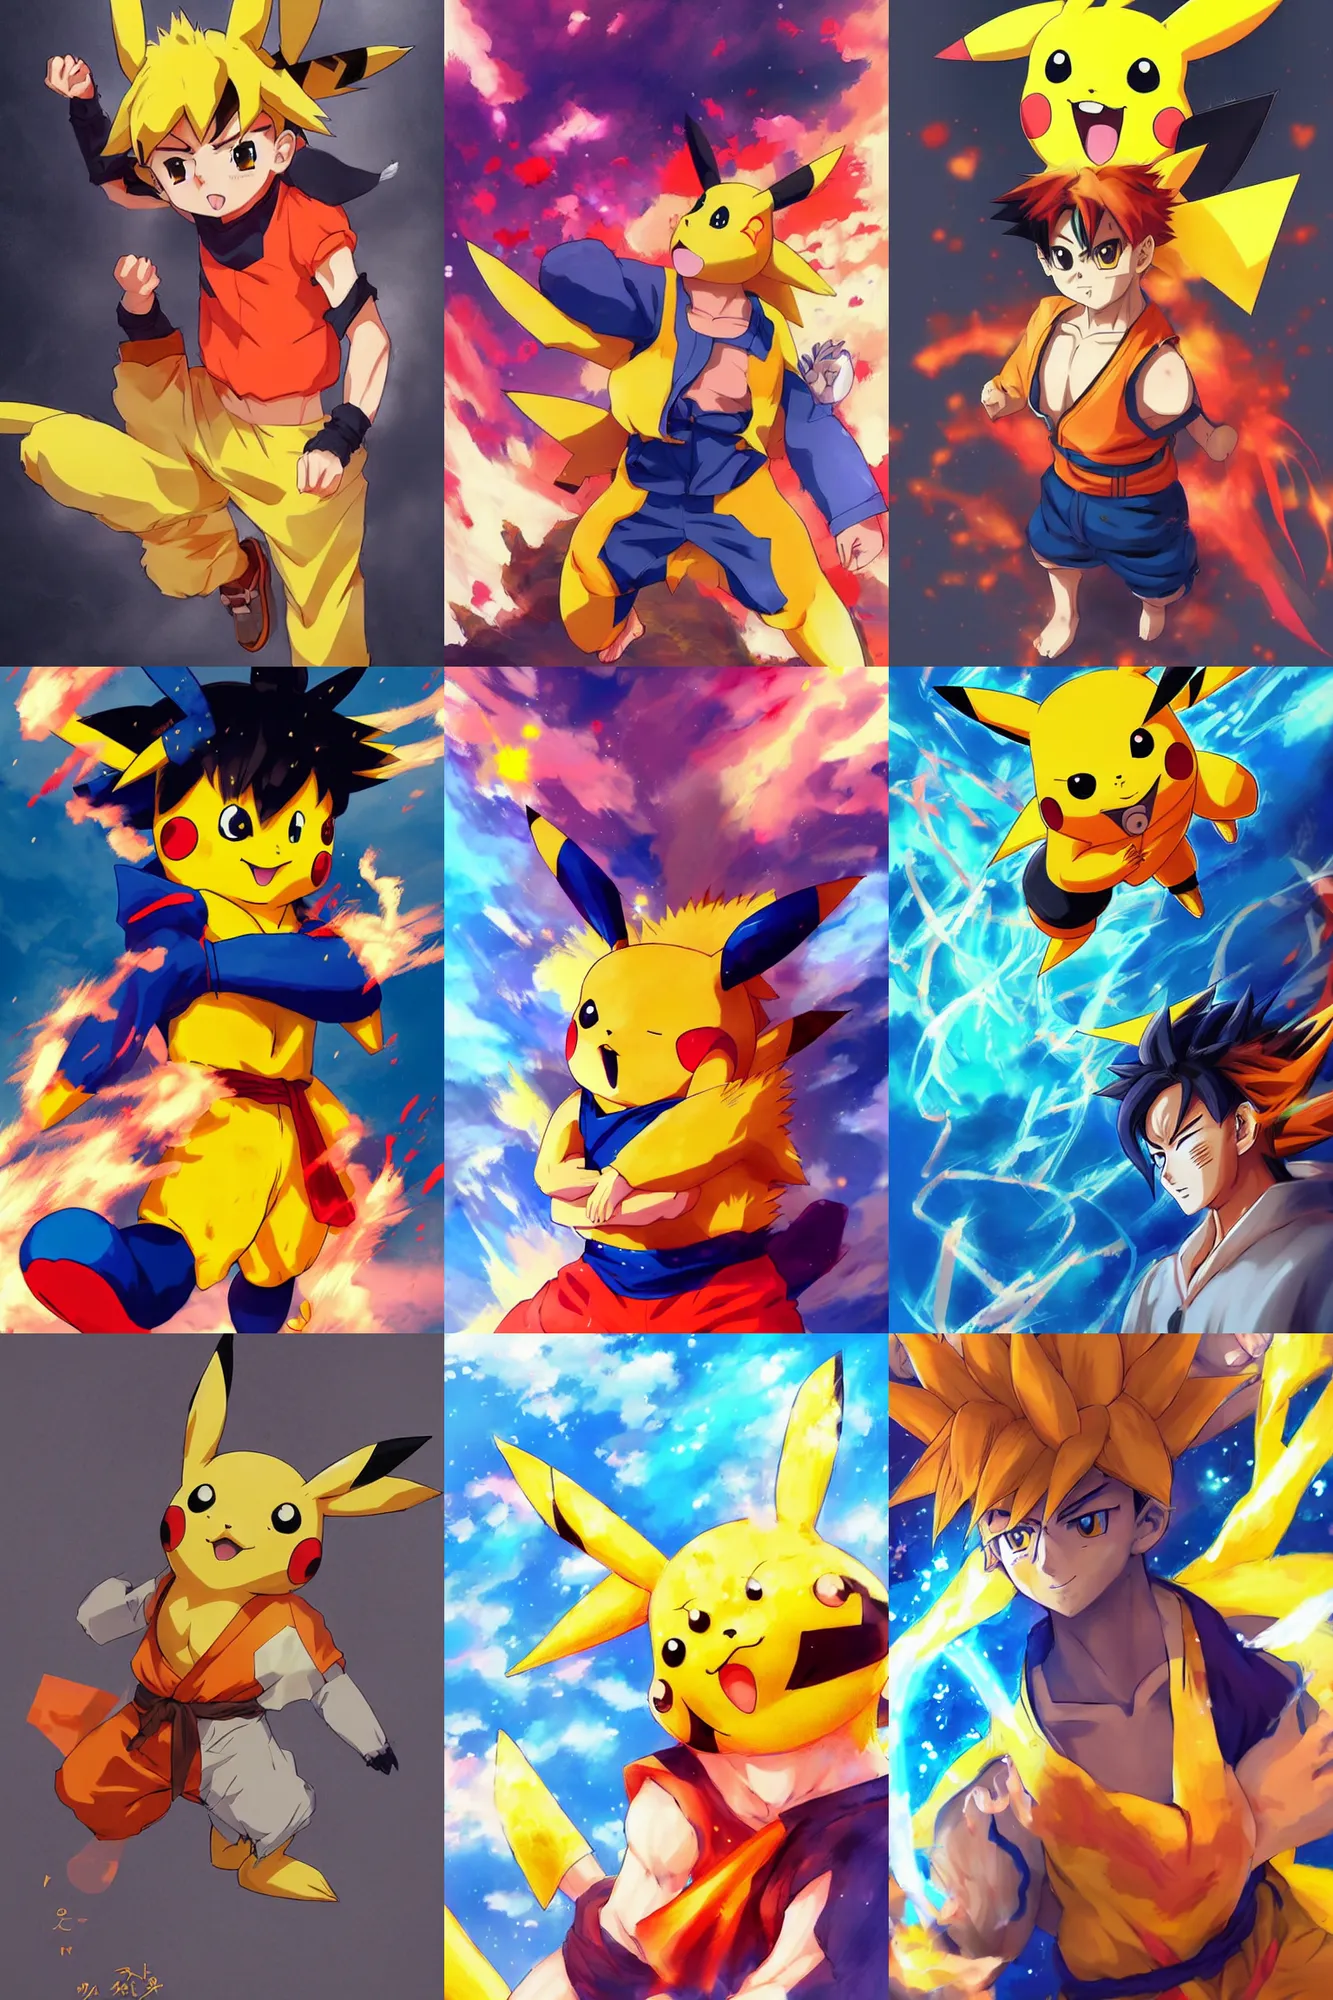 Prompt: beautiful anime art of pikachu dressed as Goku by WLOP, rossdraws, Logan Cure, Mingchen Shen, BangkuART, sakimichan, yan gisuka, JeonSeok Lee, zeronis, Chengwei Pan on artstation